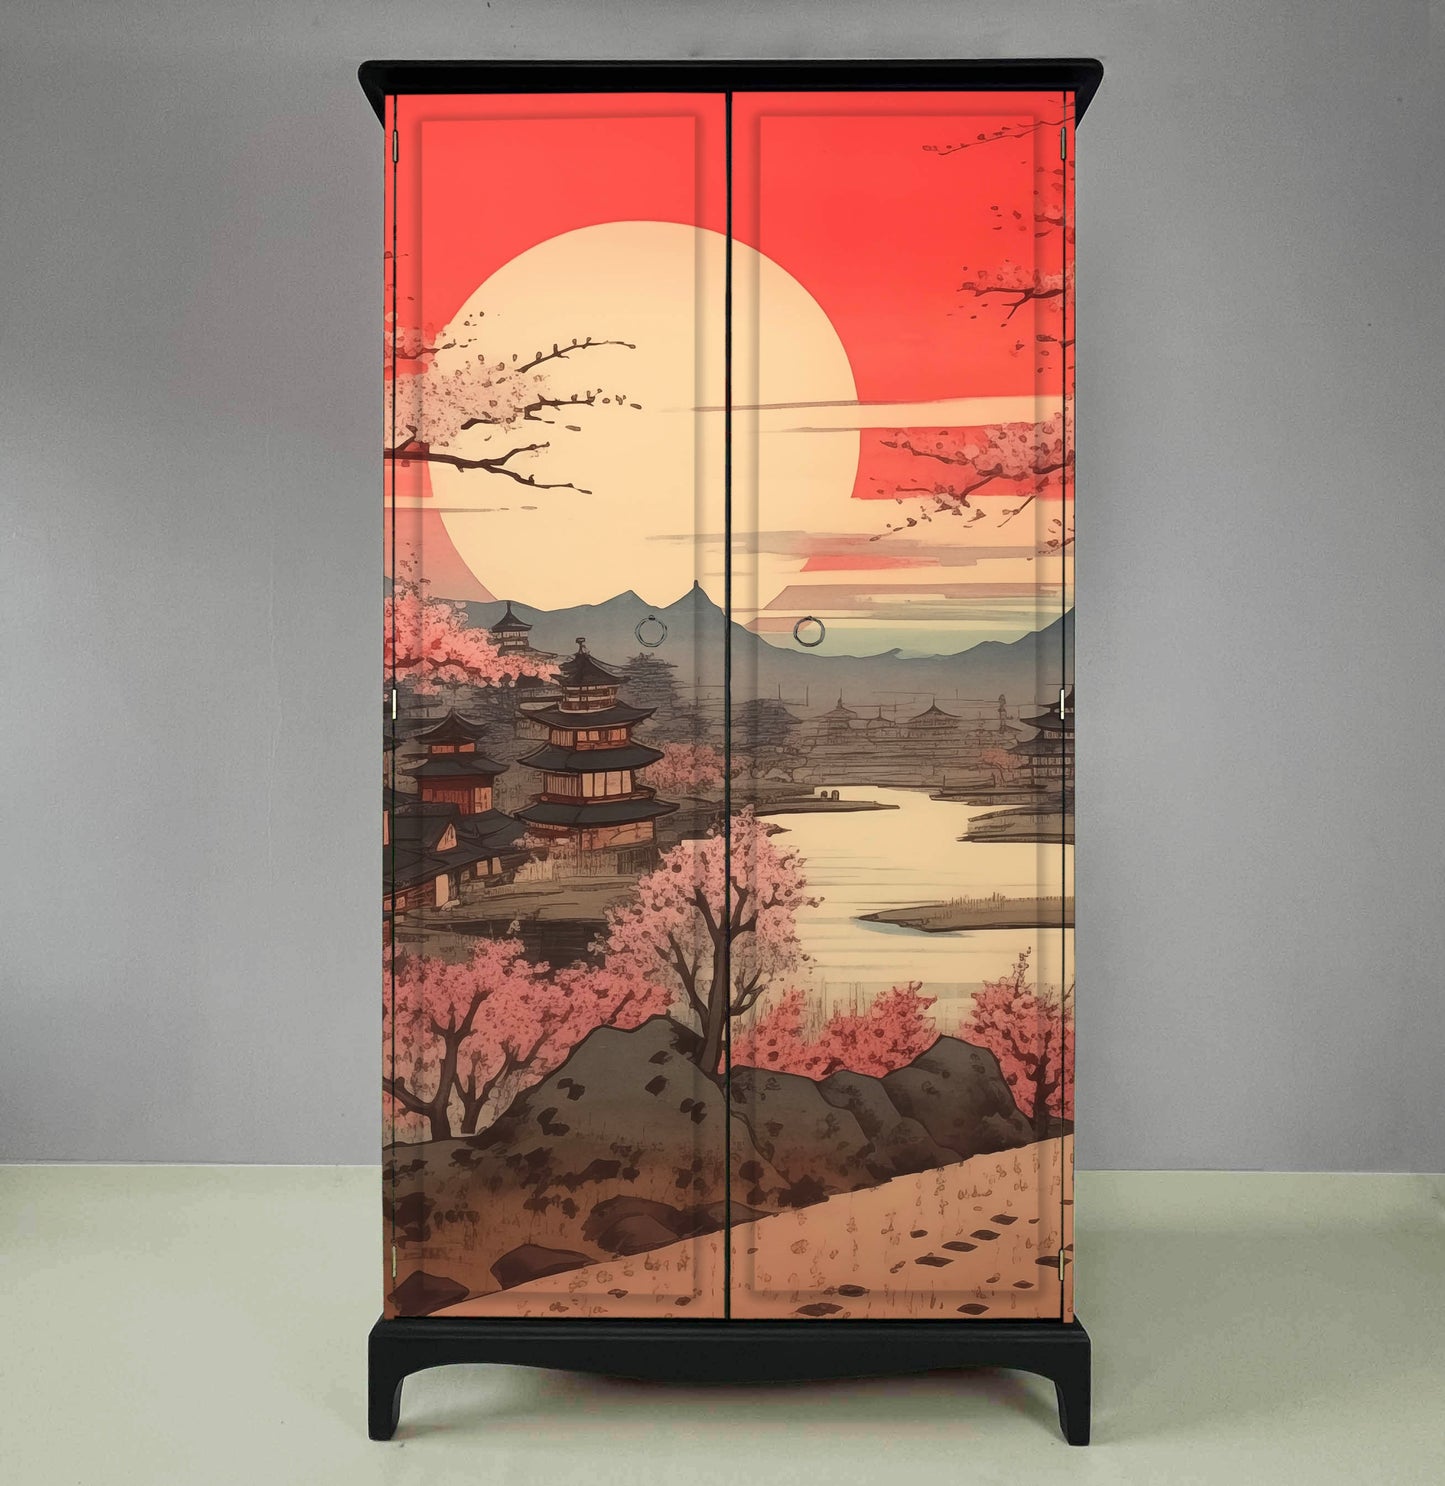 Upcycled vintage wardrobe with opulent Japanese art